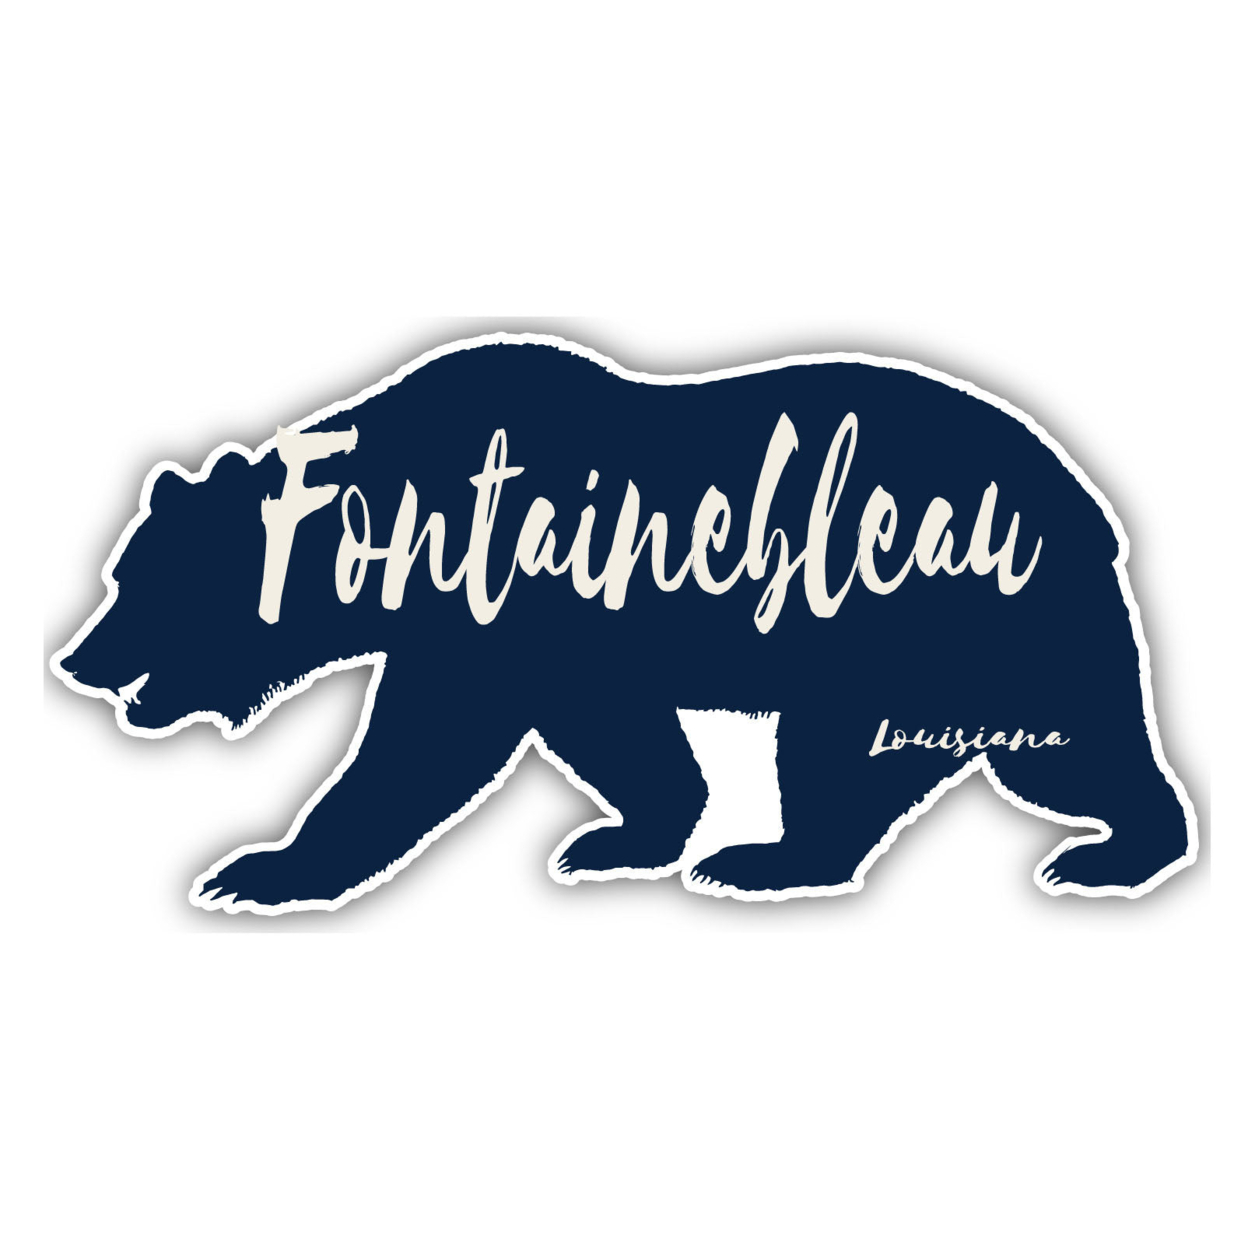 Fontainebleau Louisiana Souvenir Decorative Stickers (Choose Theme And Size) - Single Unit, 6-Inch, Bear